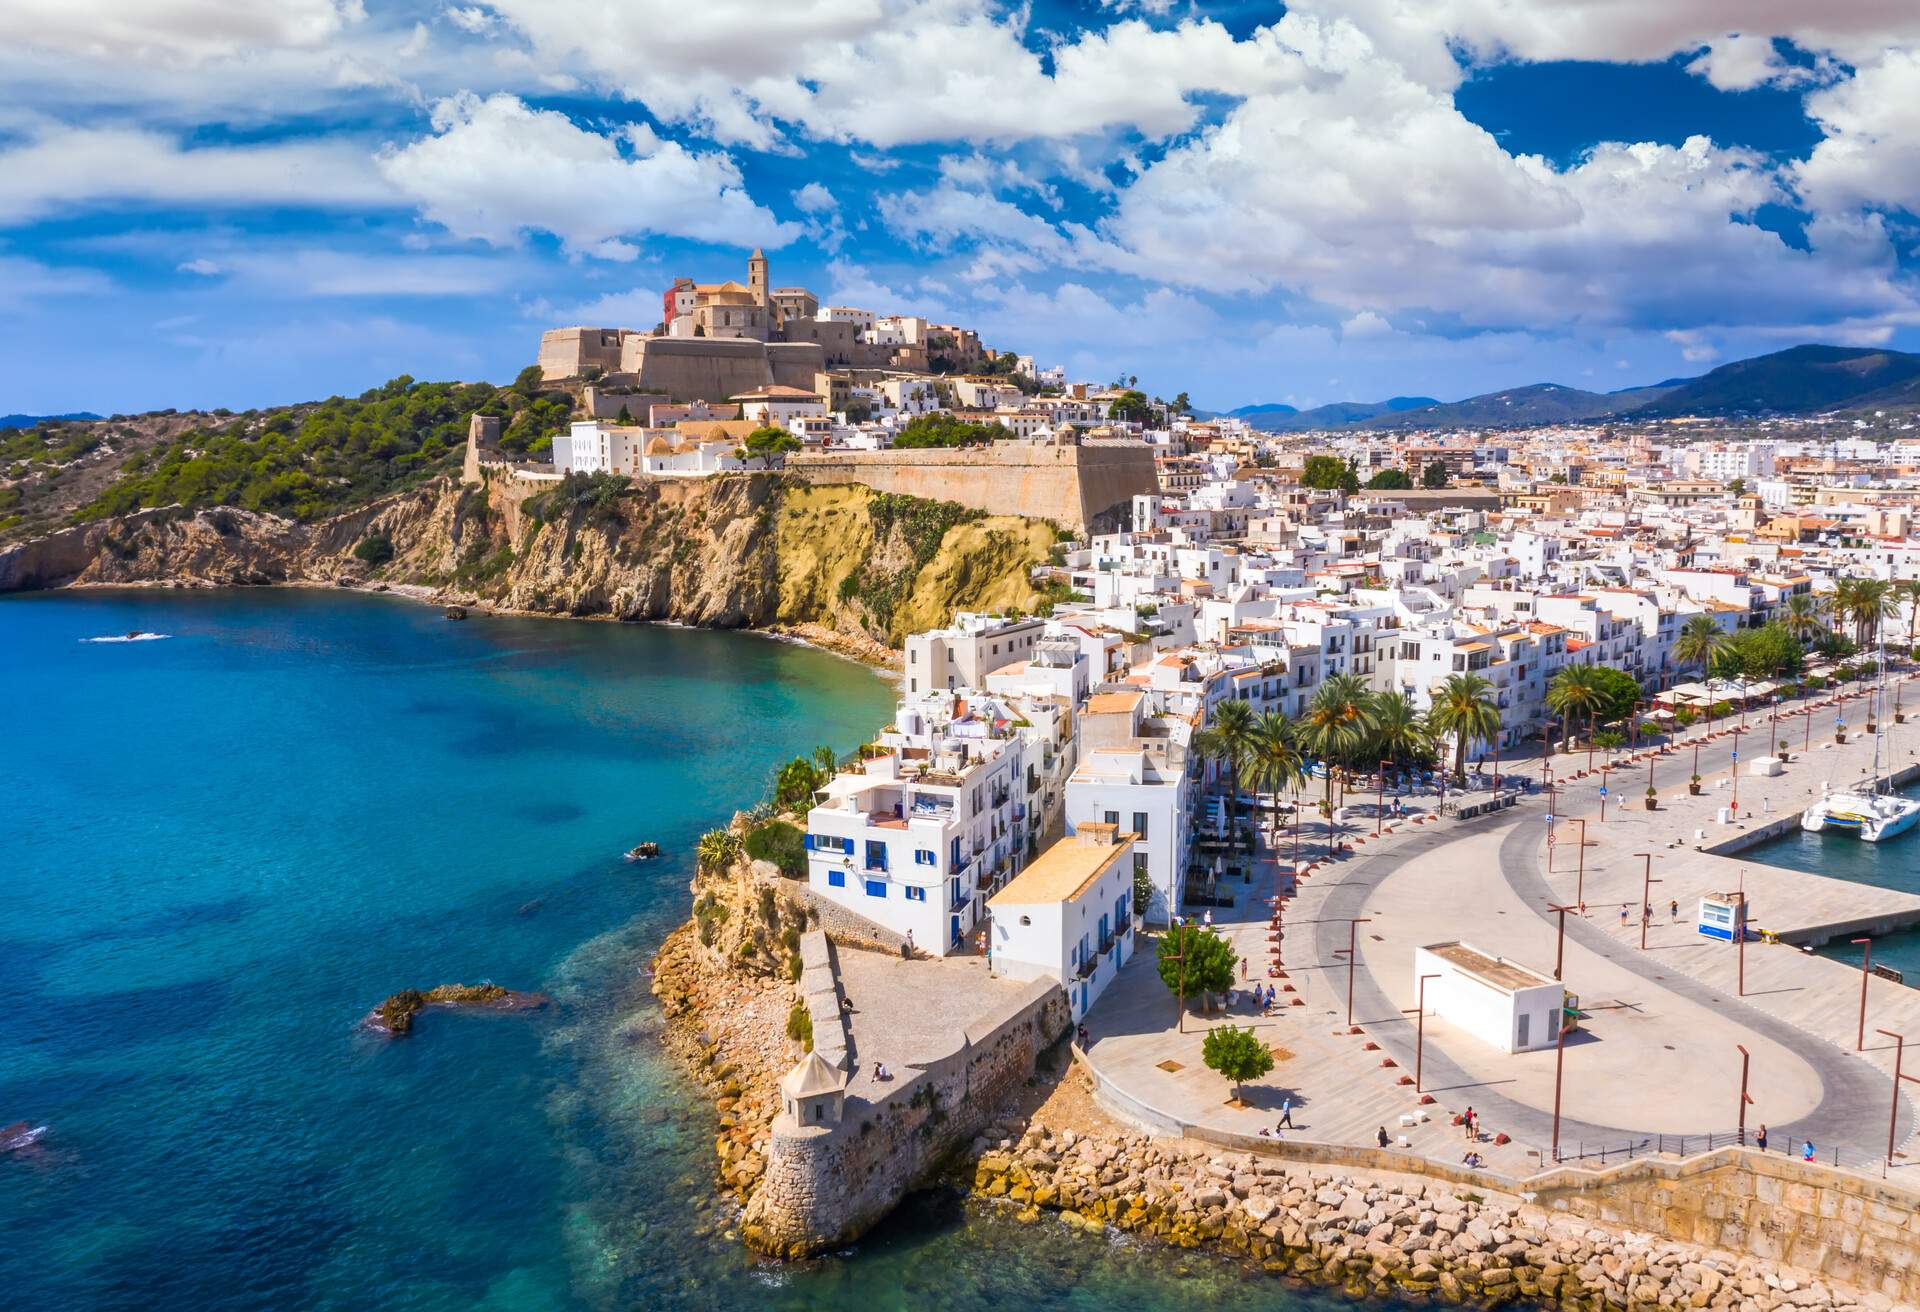 The Ibiza citadel (Dalt Vila) is built around the castle